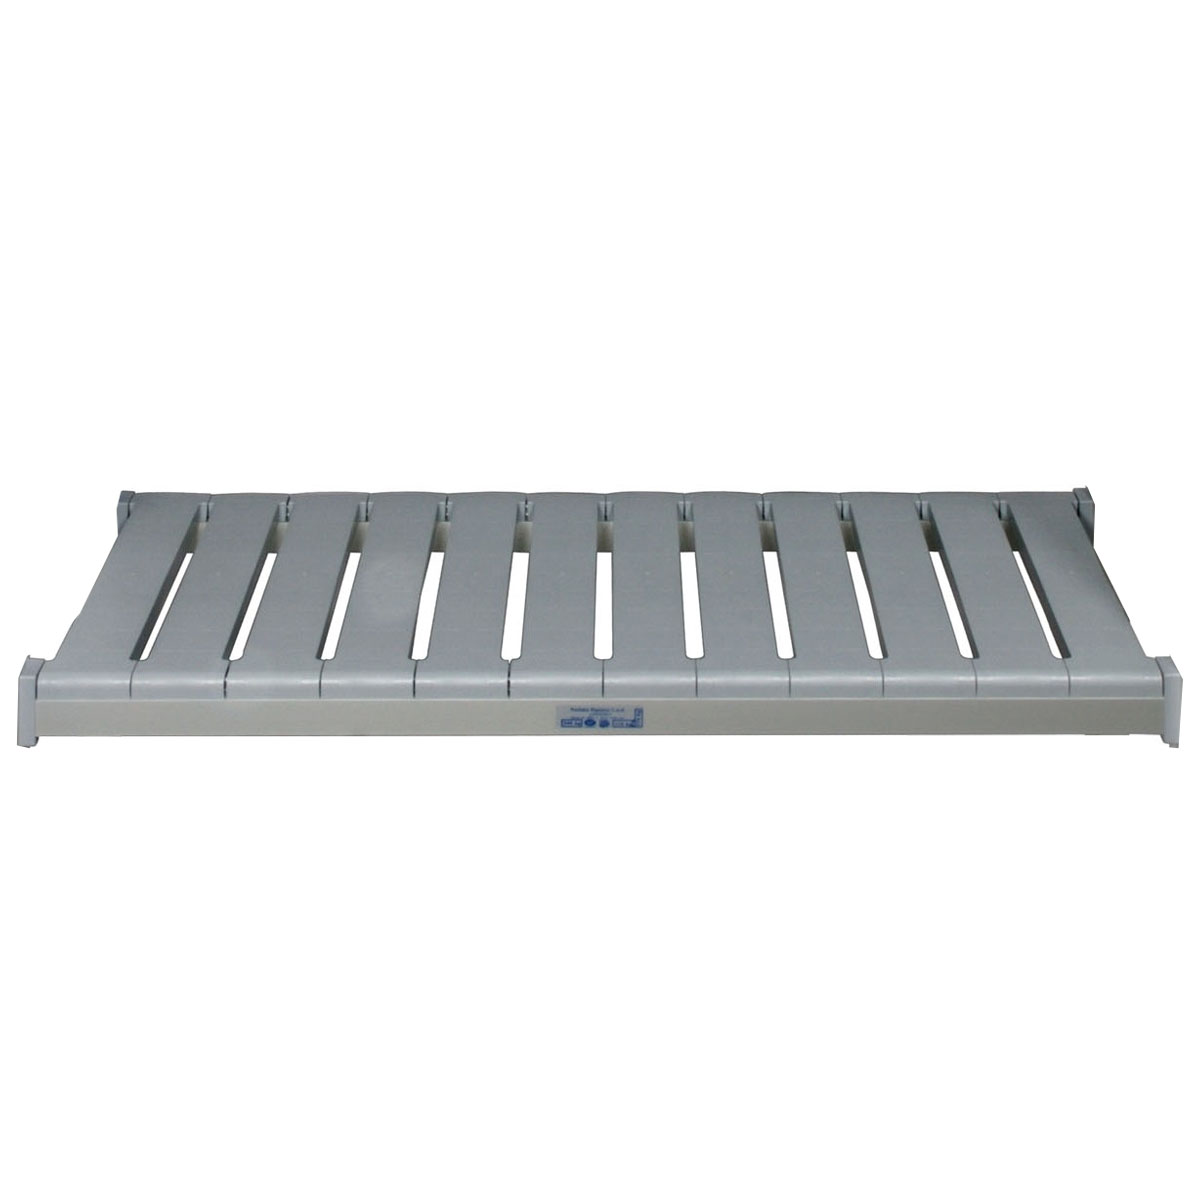 Eko Fit Polymer Range Additional Shelf - W1070 x D525mm - KFS533